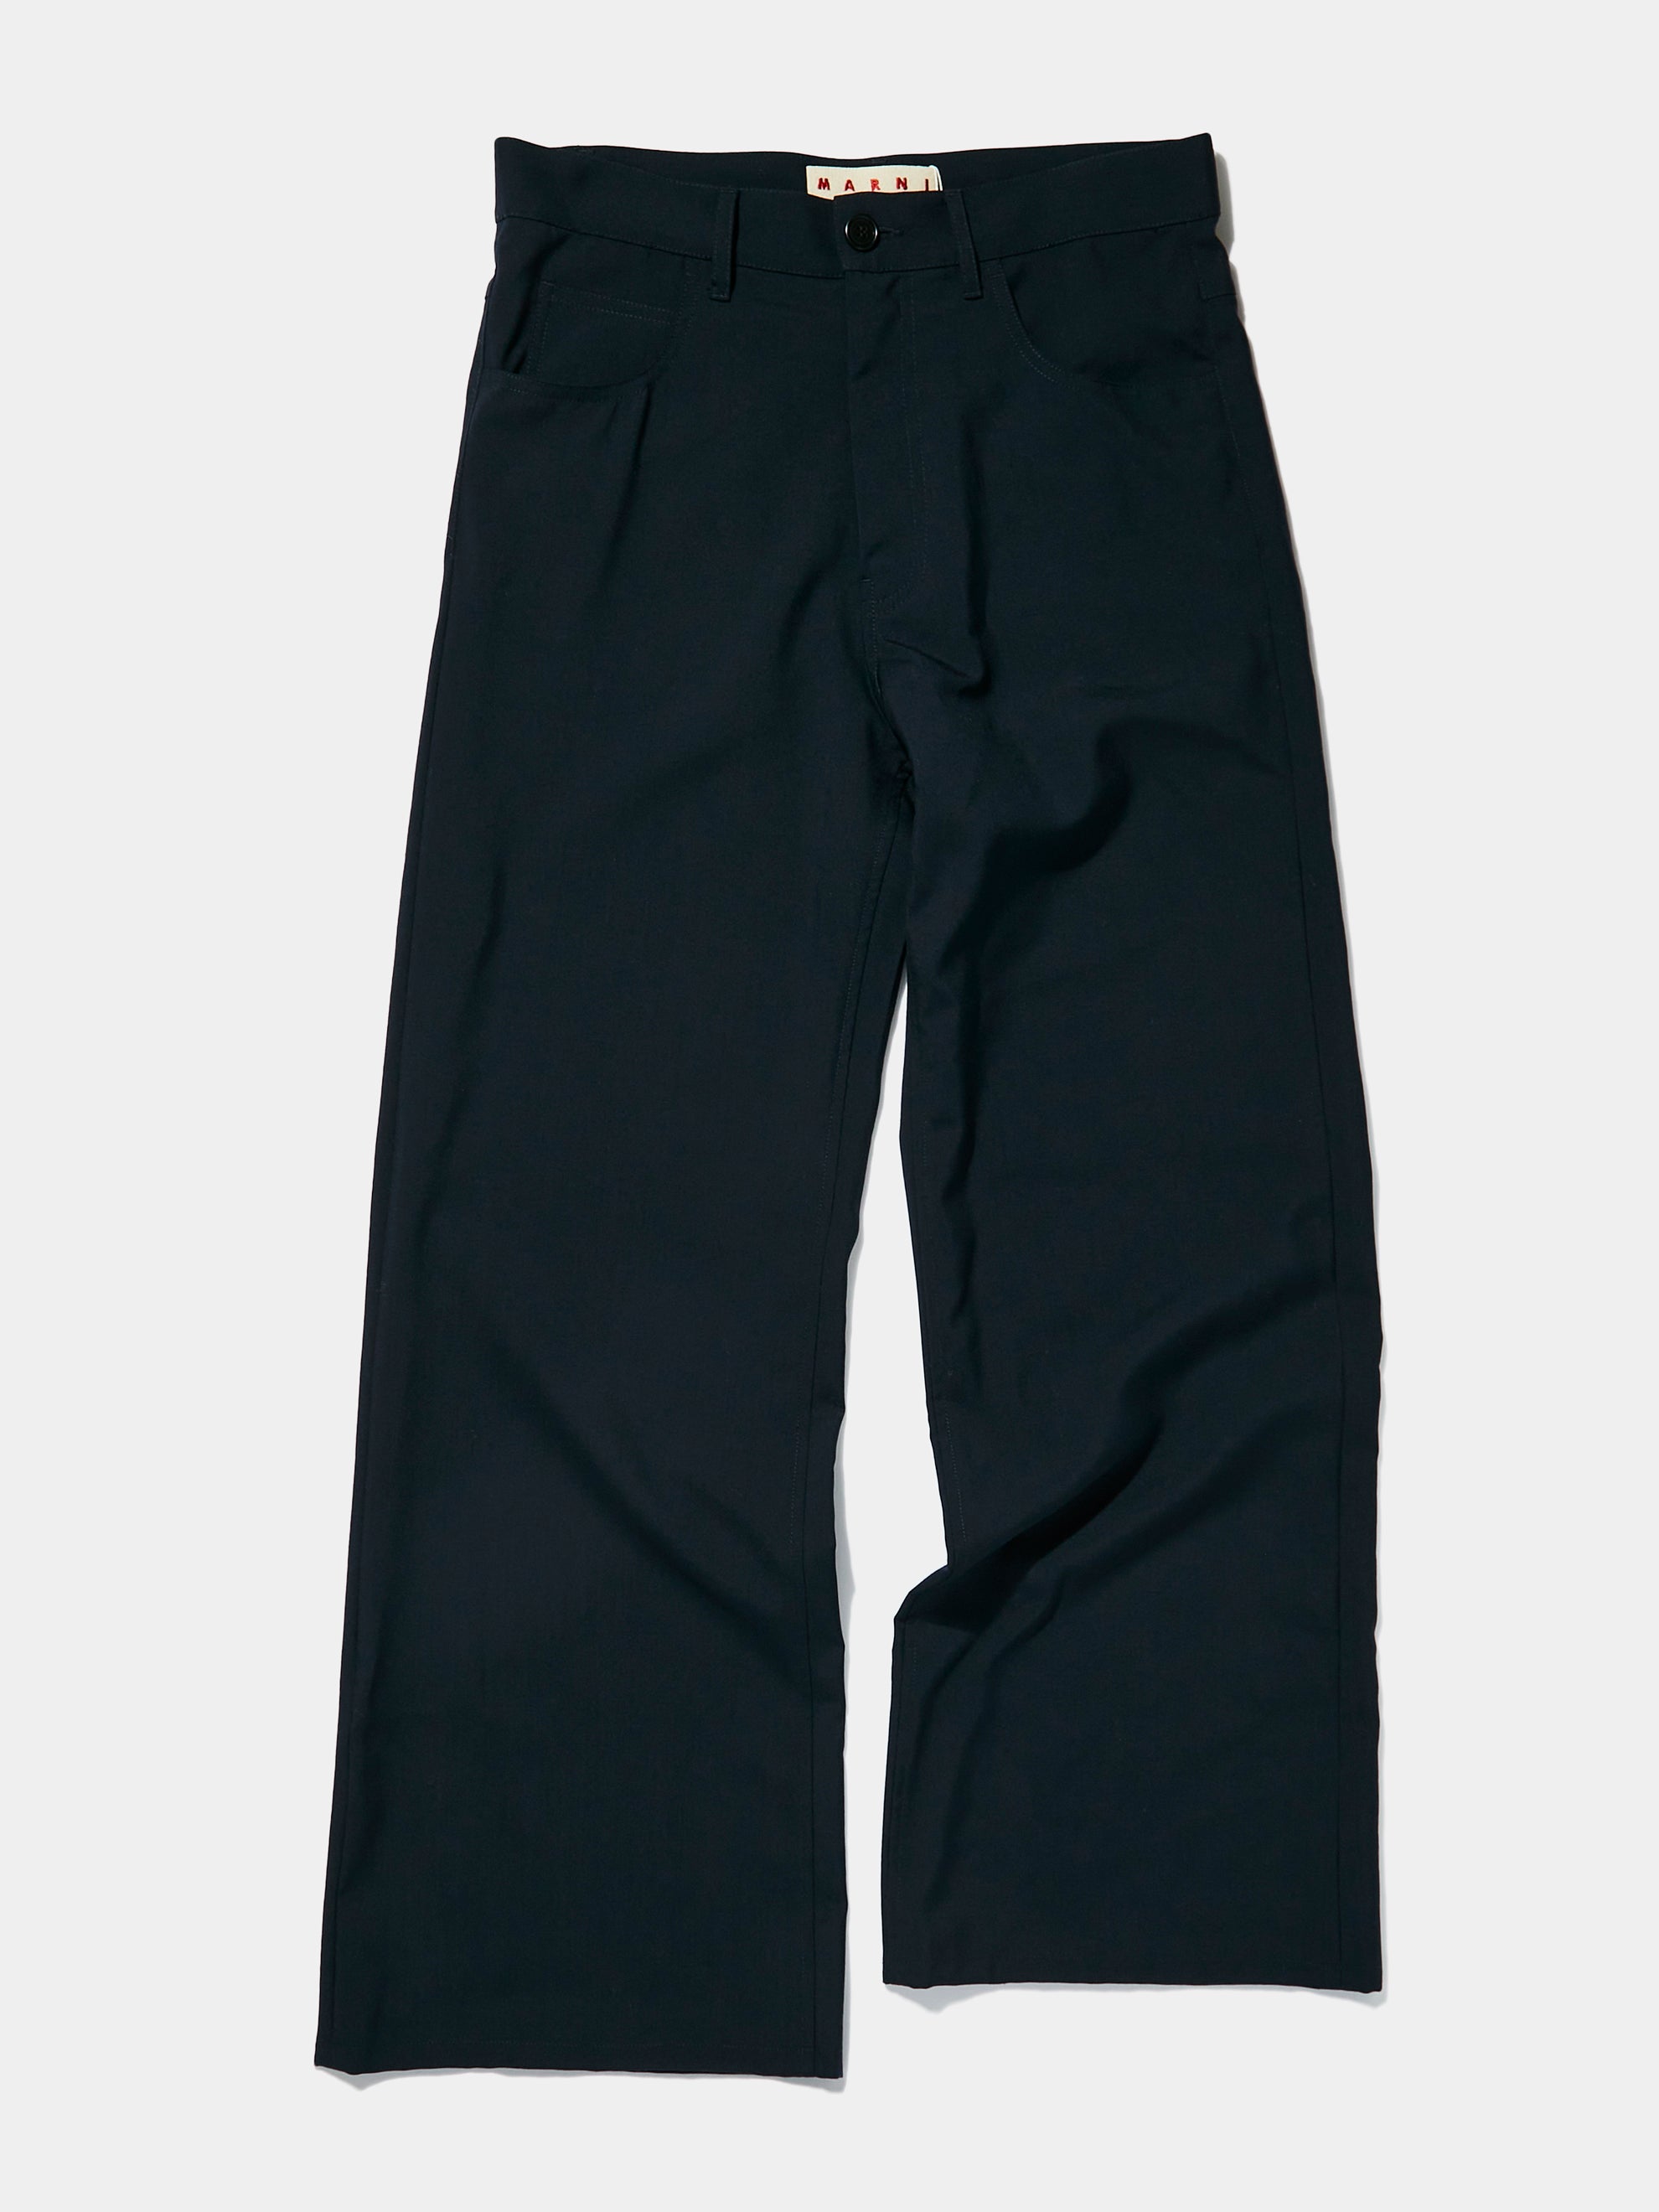 Trousers (Black)